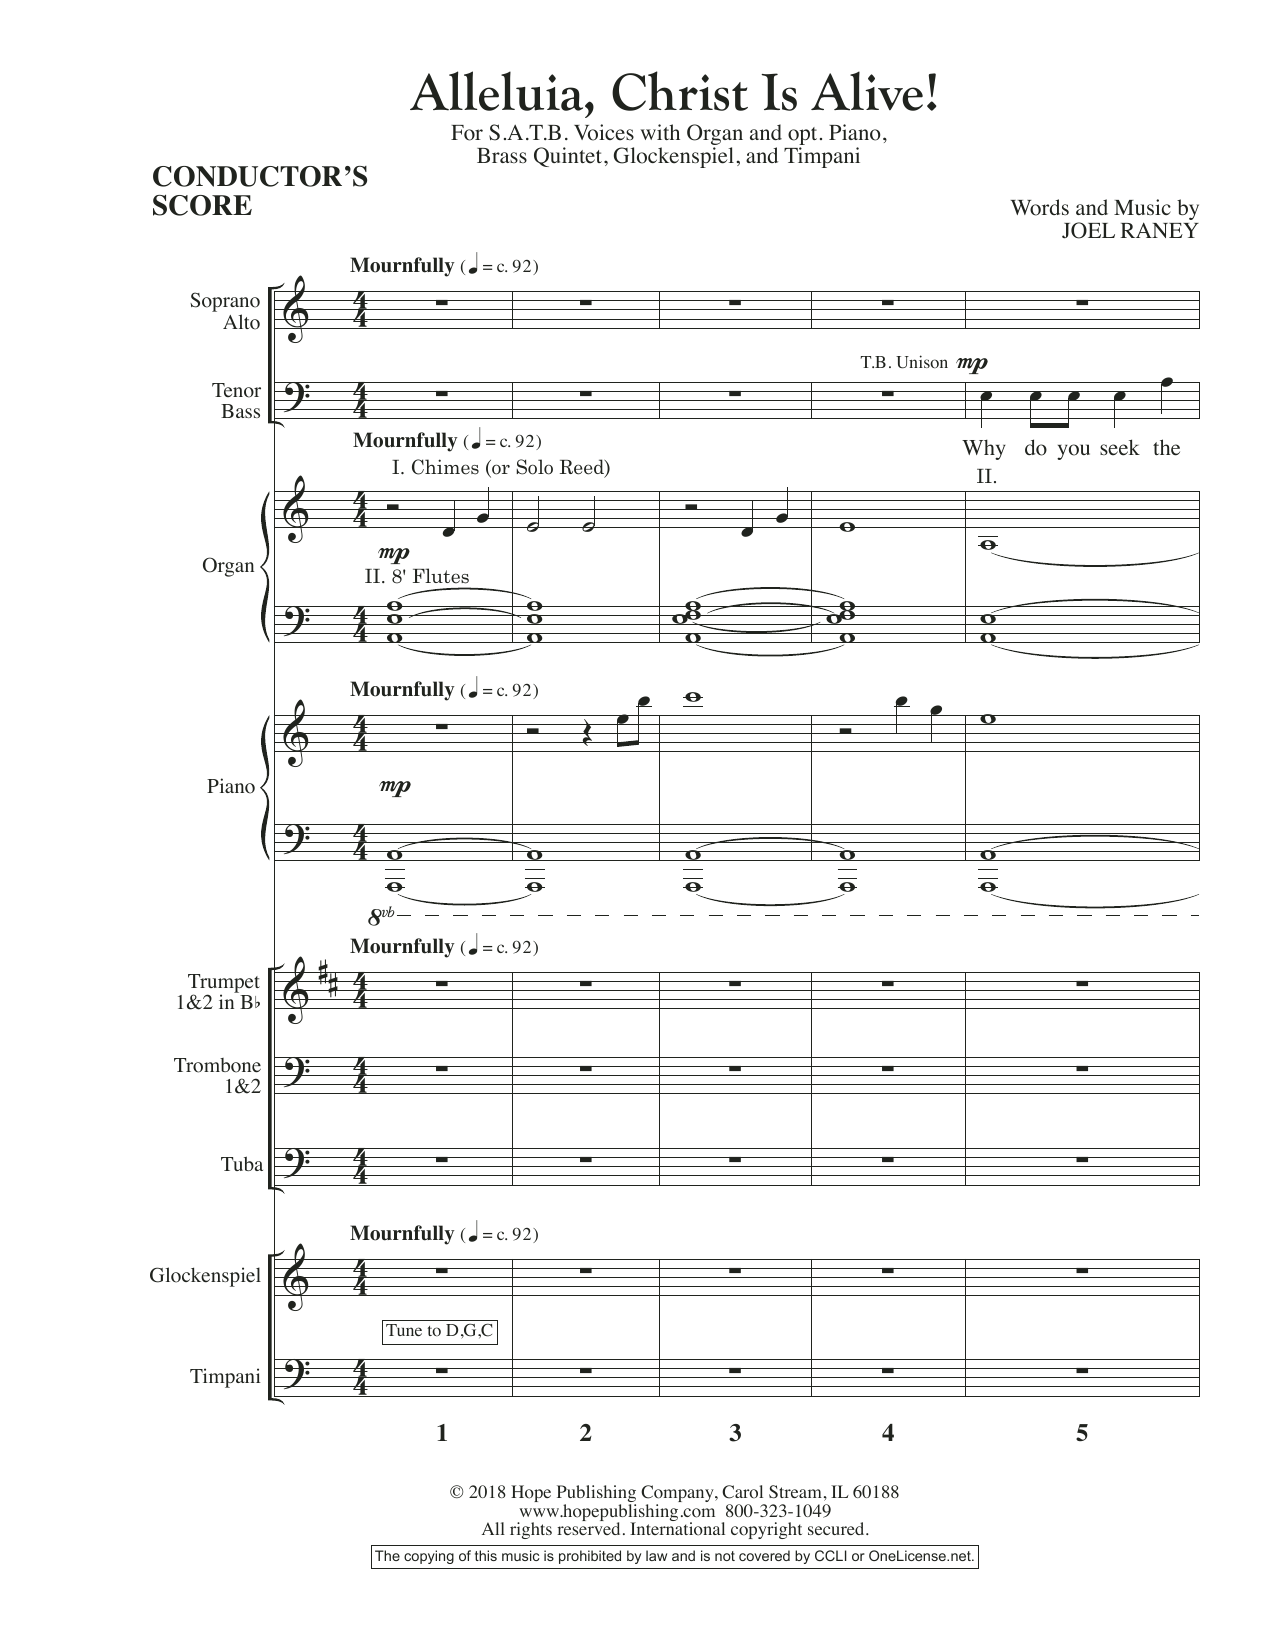 Joel Raney Alleluia, Christ Is Alive! - Full Score Sheet Music Notes & Chords for Choir Instrumental Pak - Download or Print PDF